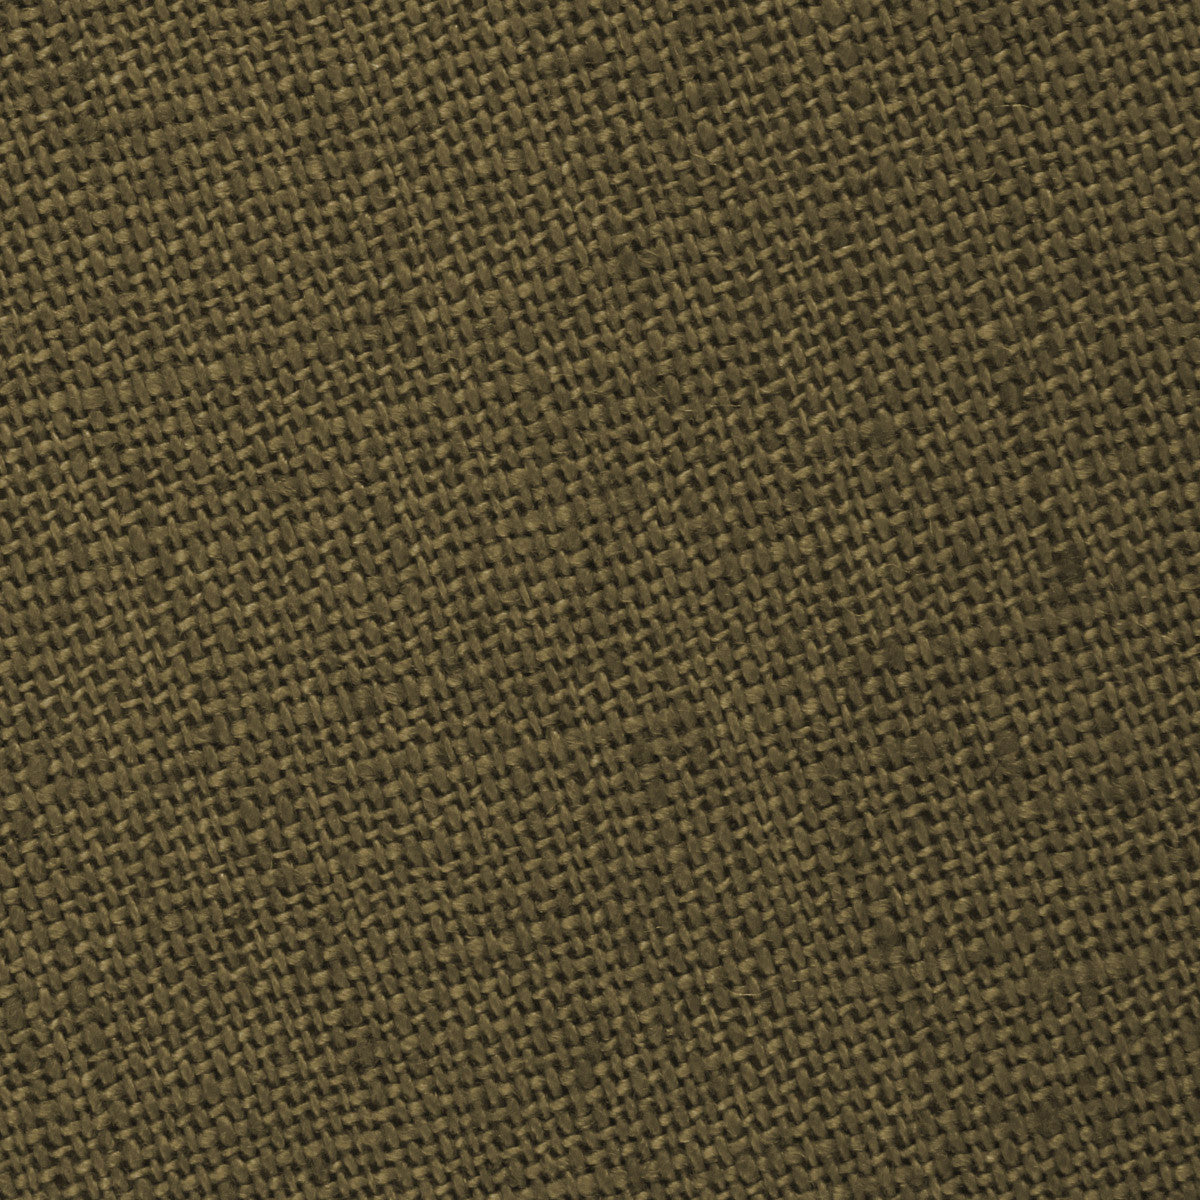 Dry Green Khaki Linen Fabric Self Bowtie